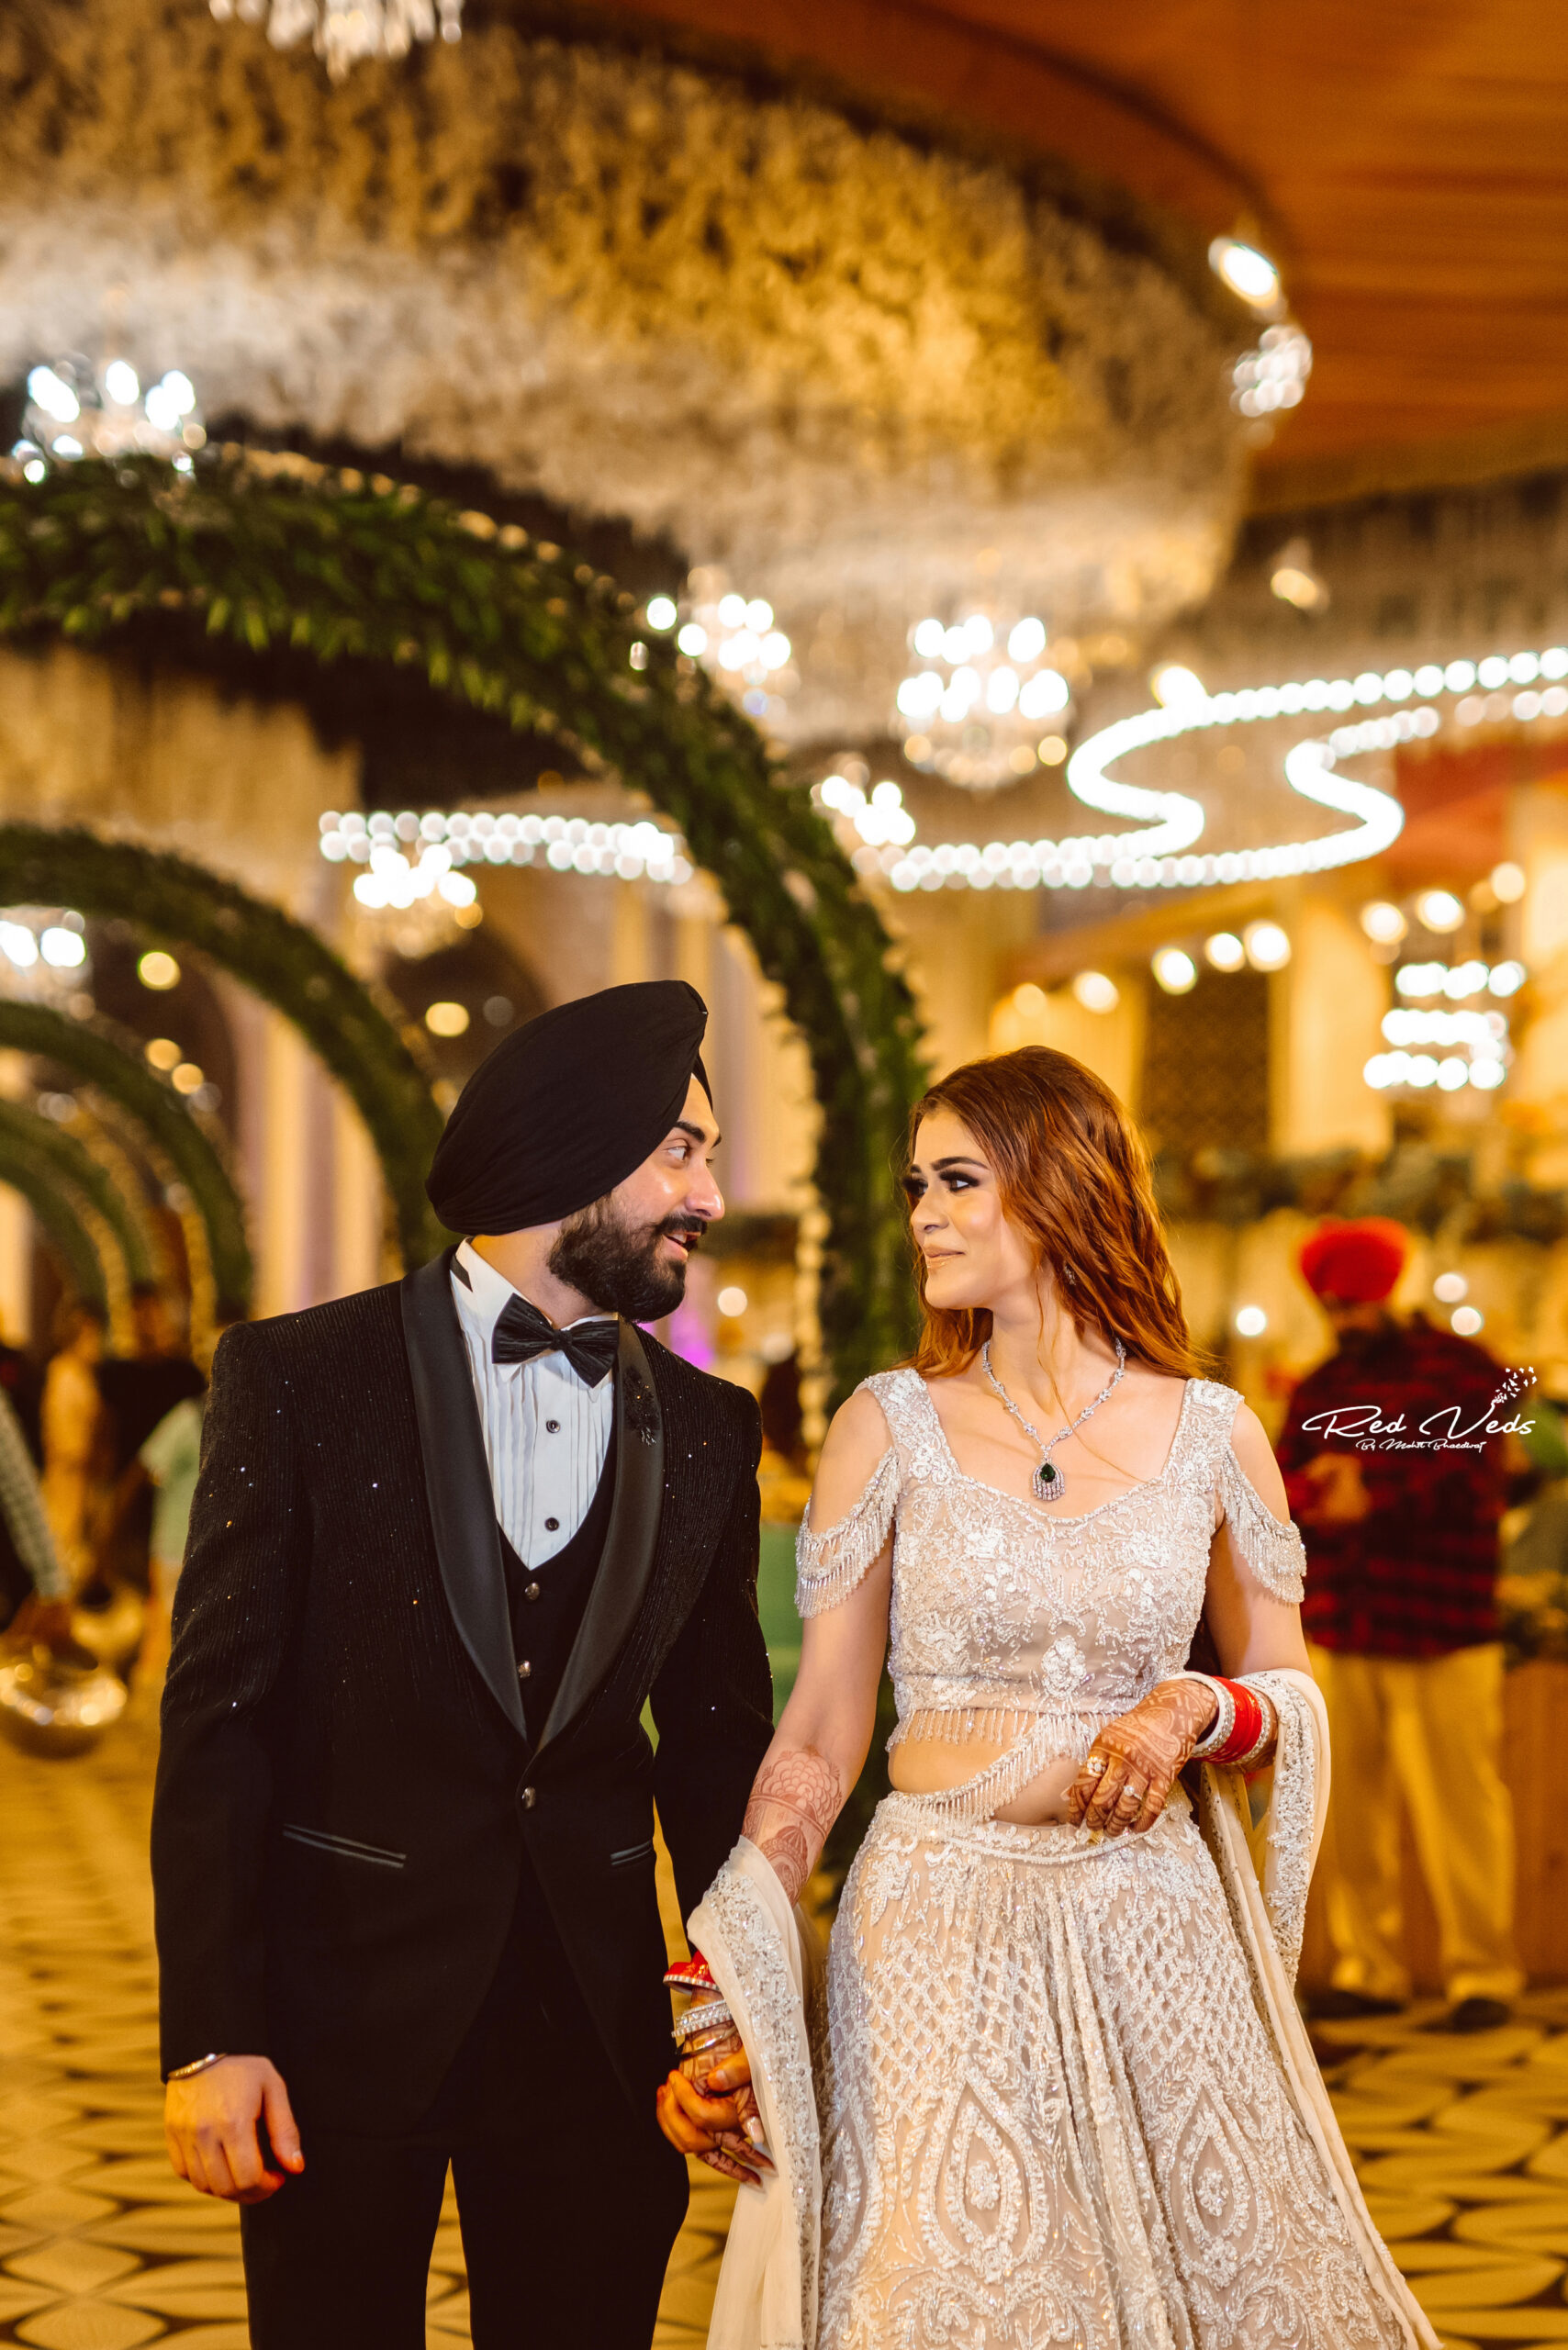 Couple in Traditional Pakistani Wedding Attire